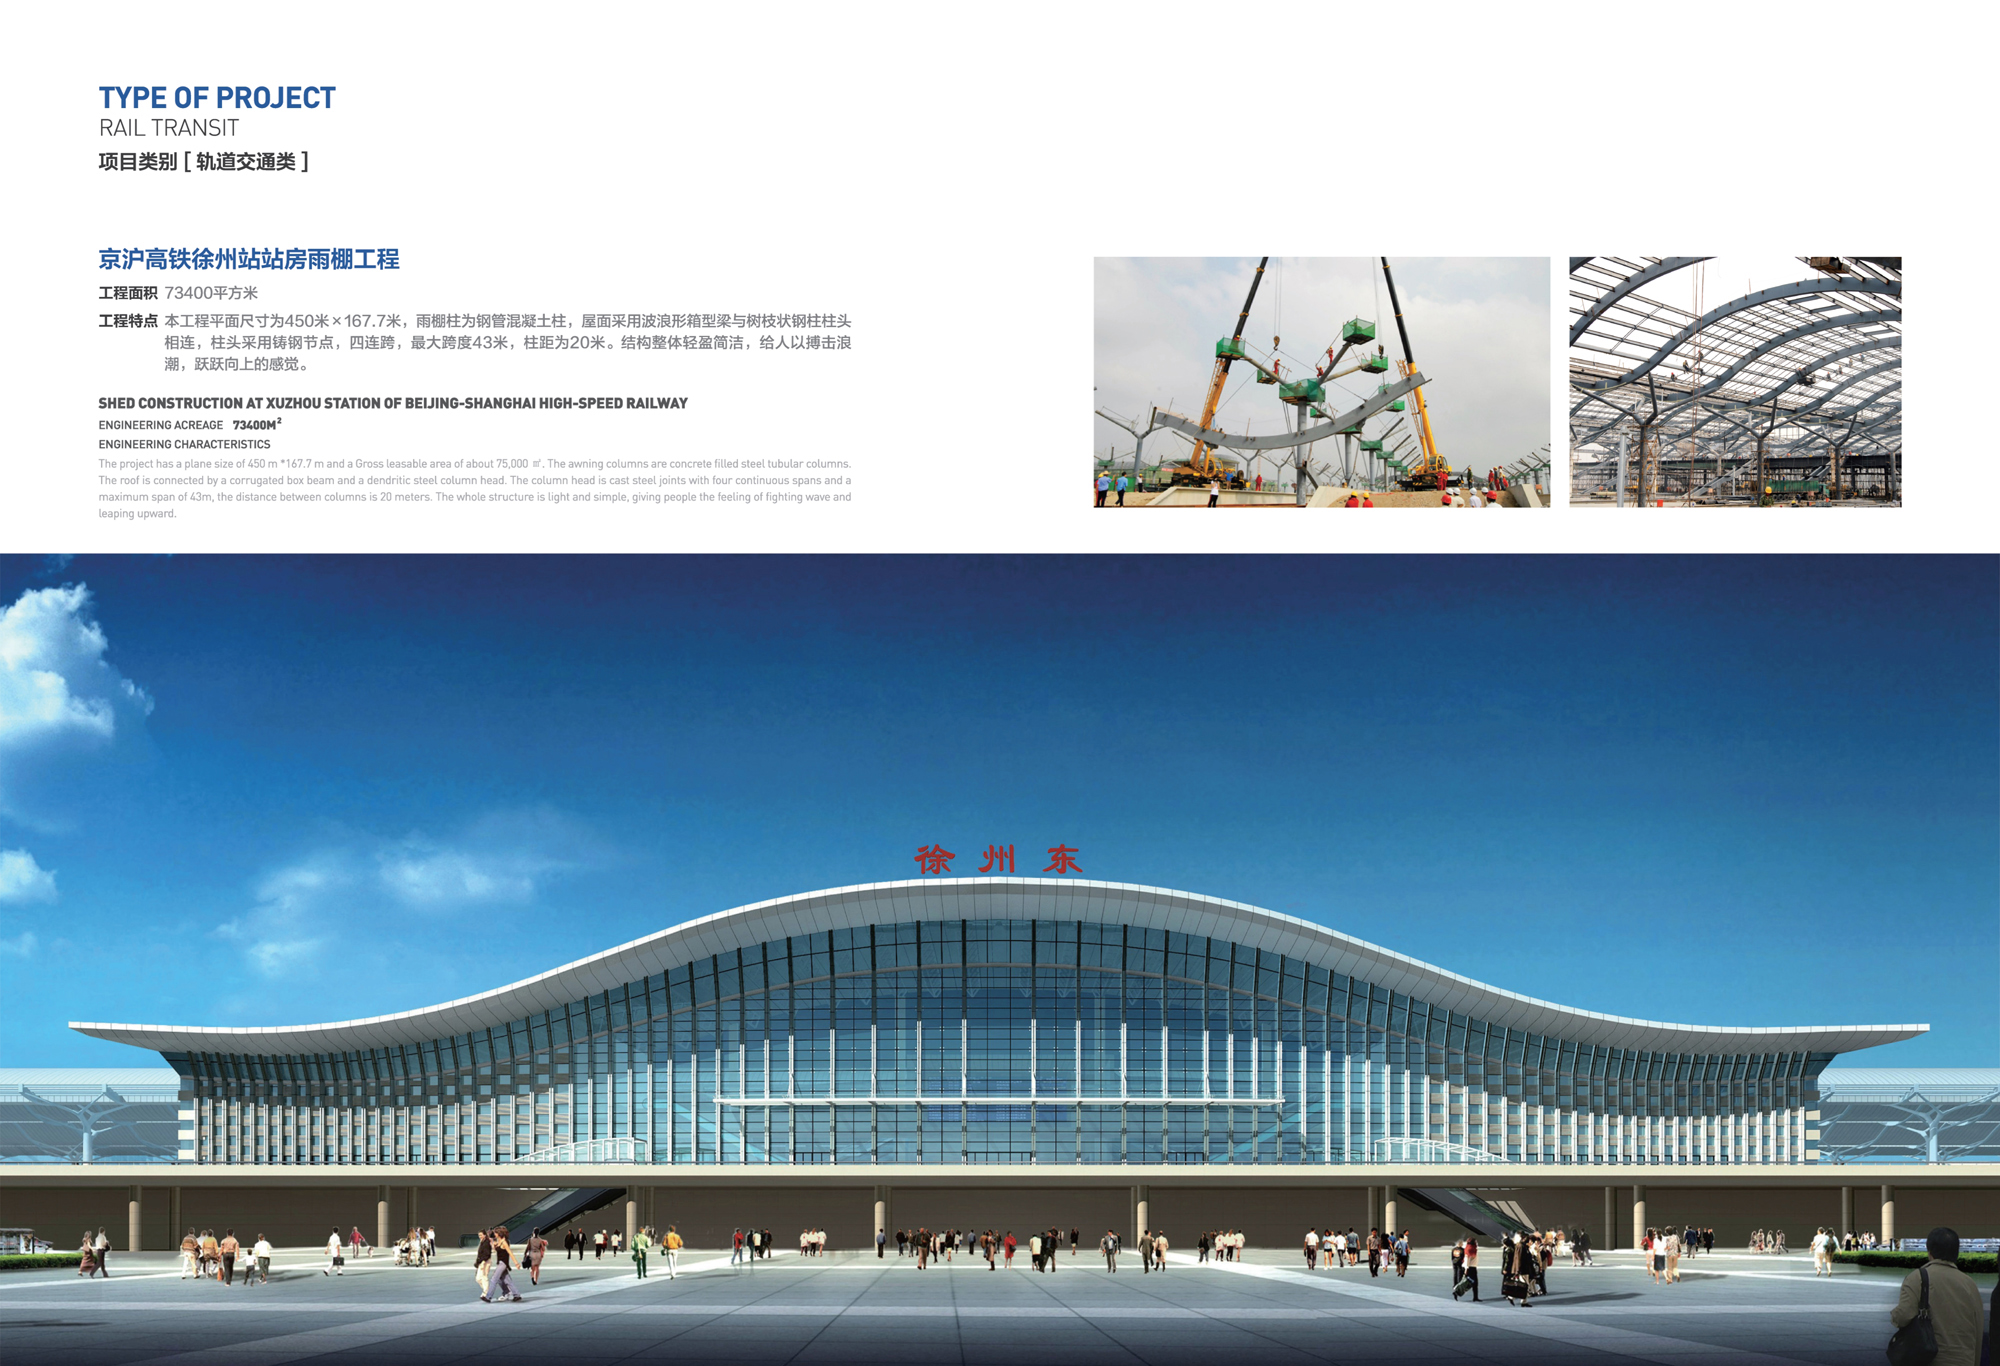 Canopy Project of Xuzhou railway station of Beijing Shanghai High speed Railway